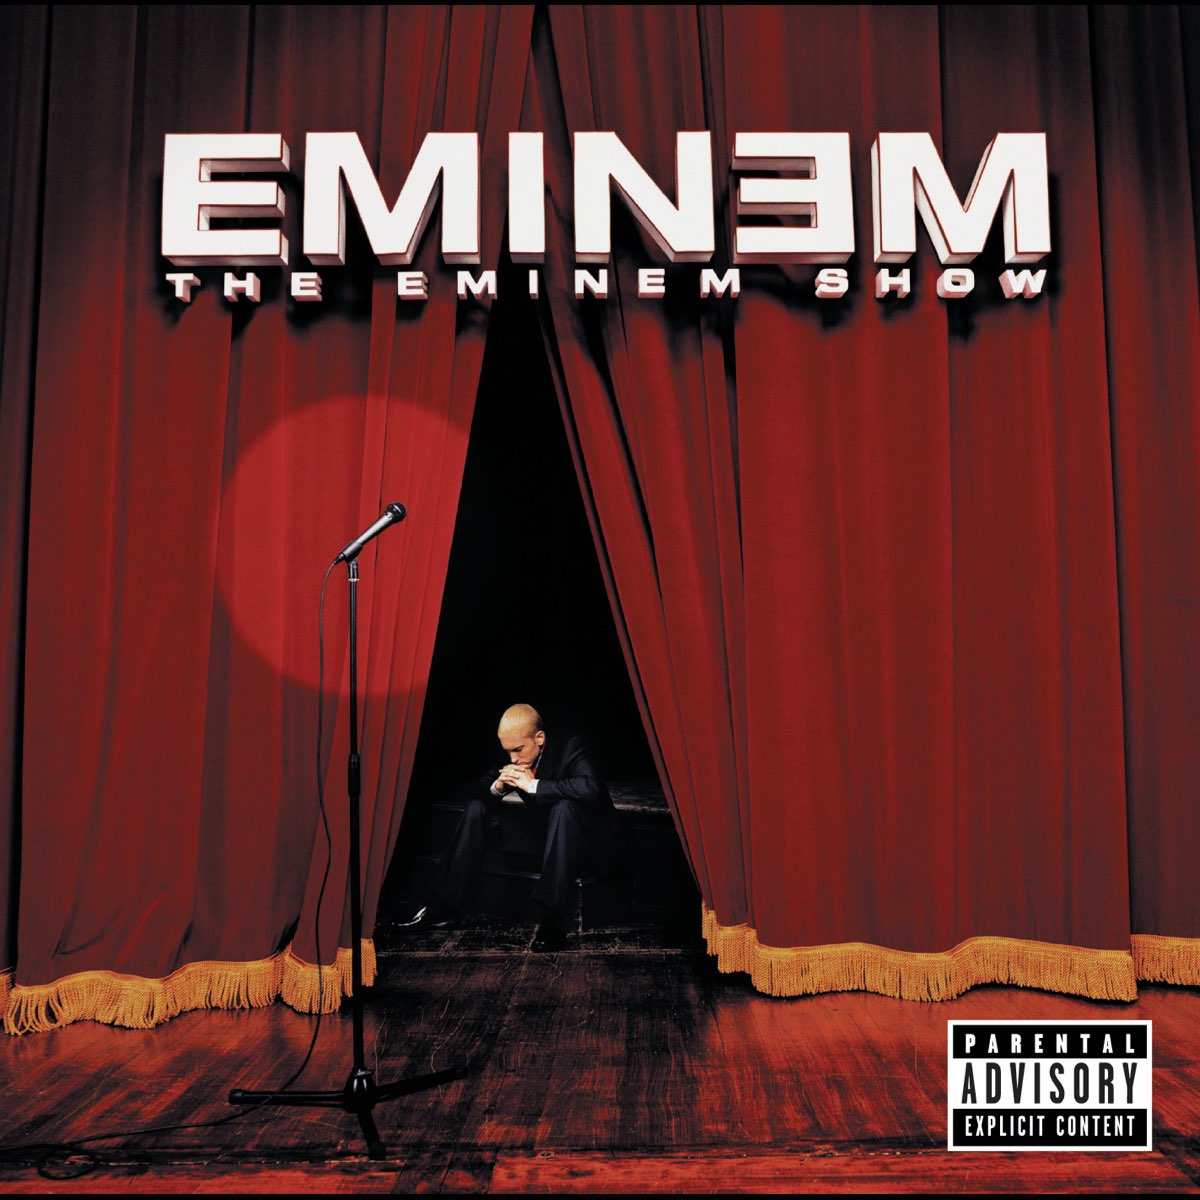 ‎The Eminem Show by Eminem on Apple Music